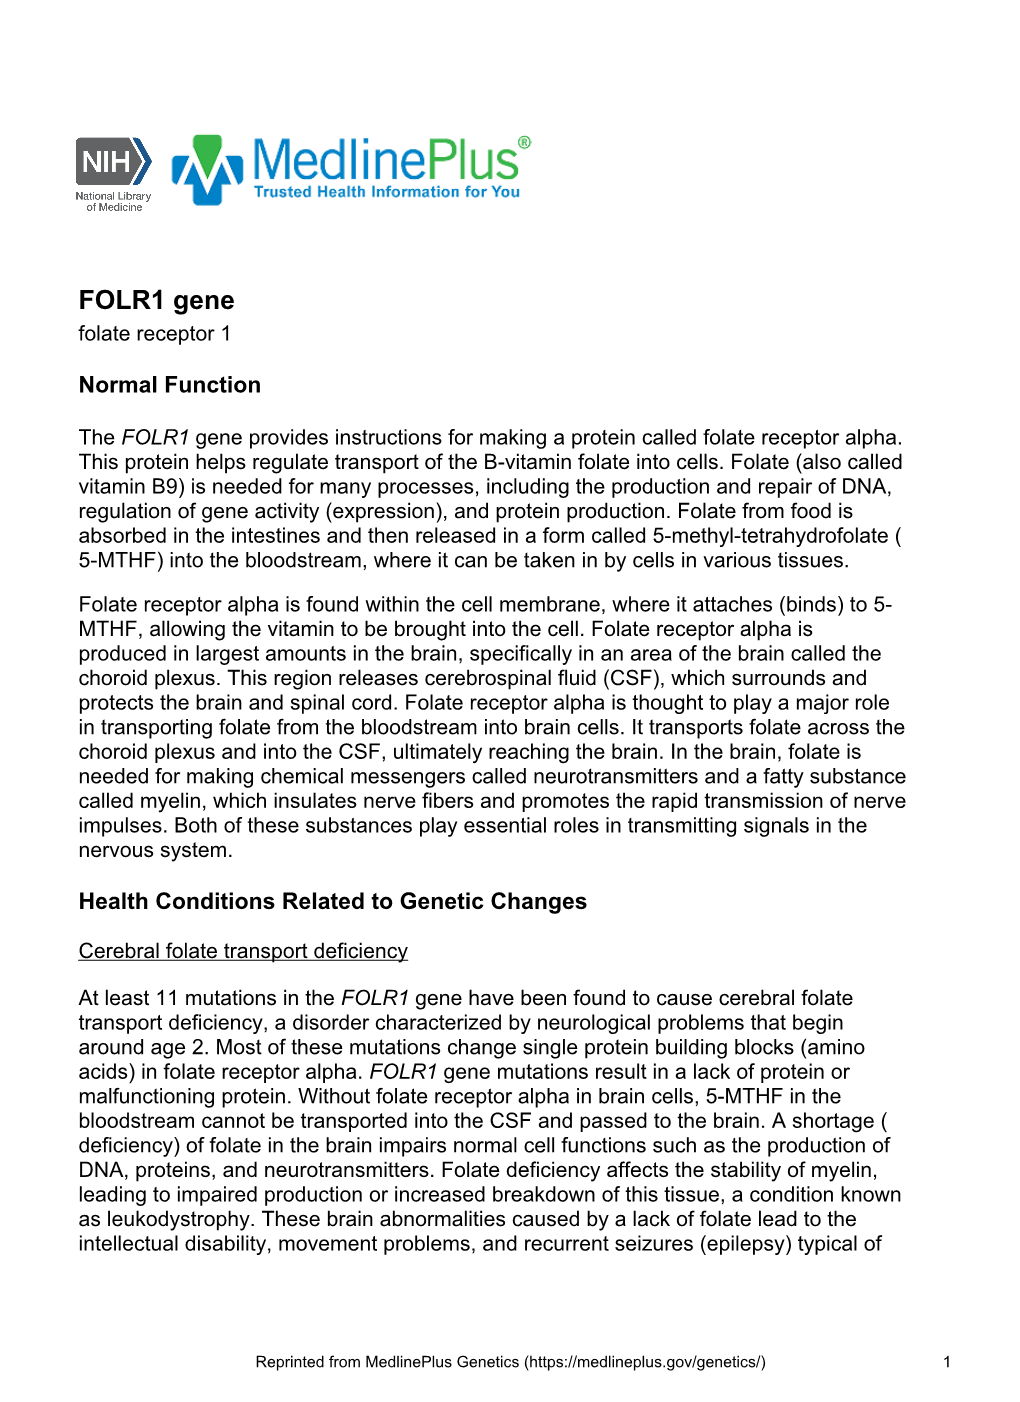 FOLR1 Gene Folate Receptor 1